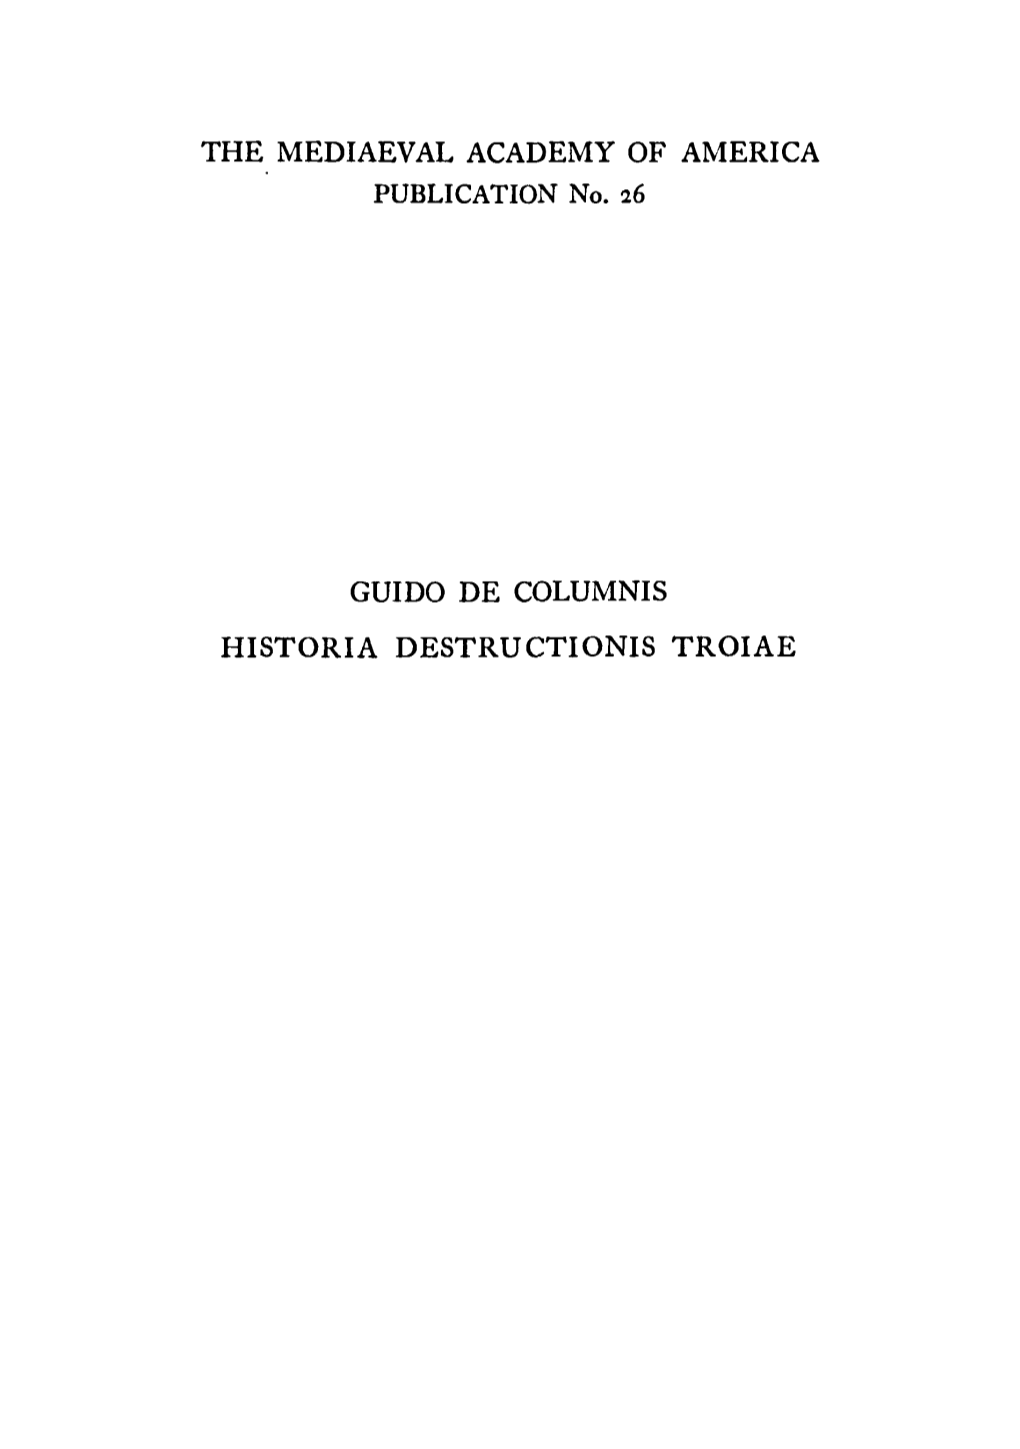 Griffin, Nathaniel Edward/ Guido De Columnis, Historia Destructionis